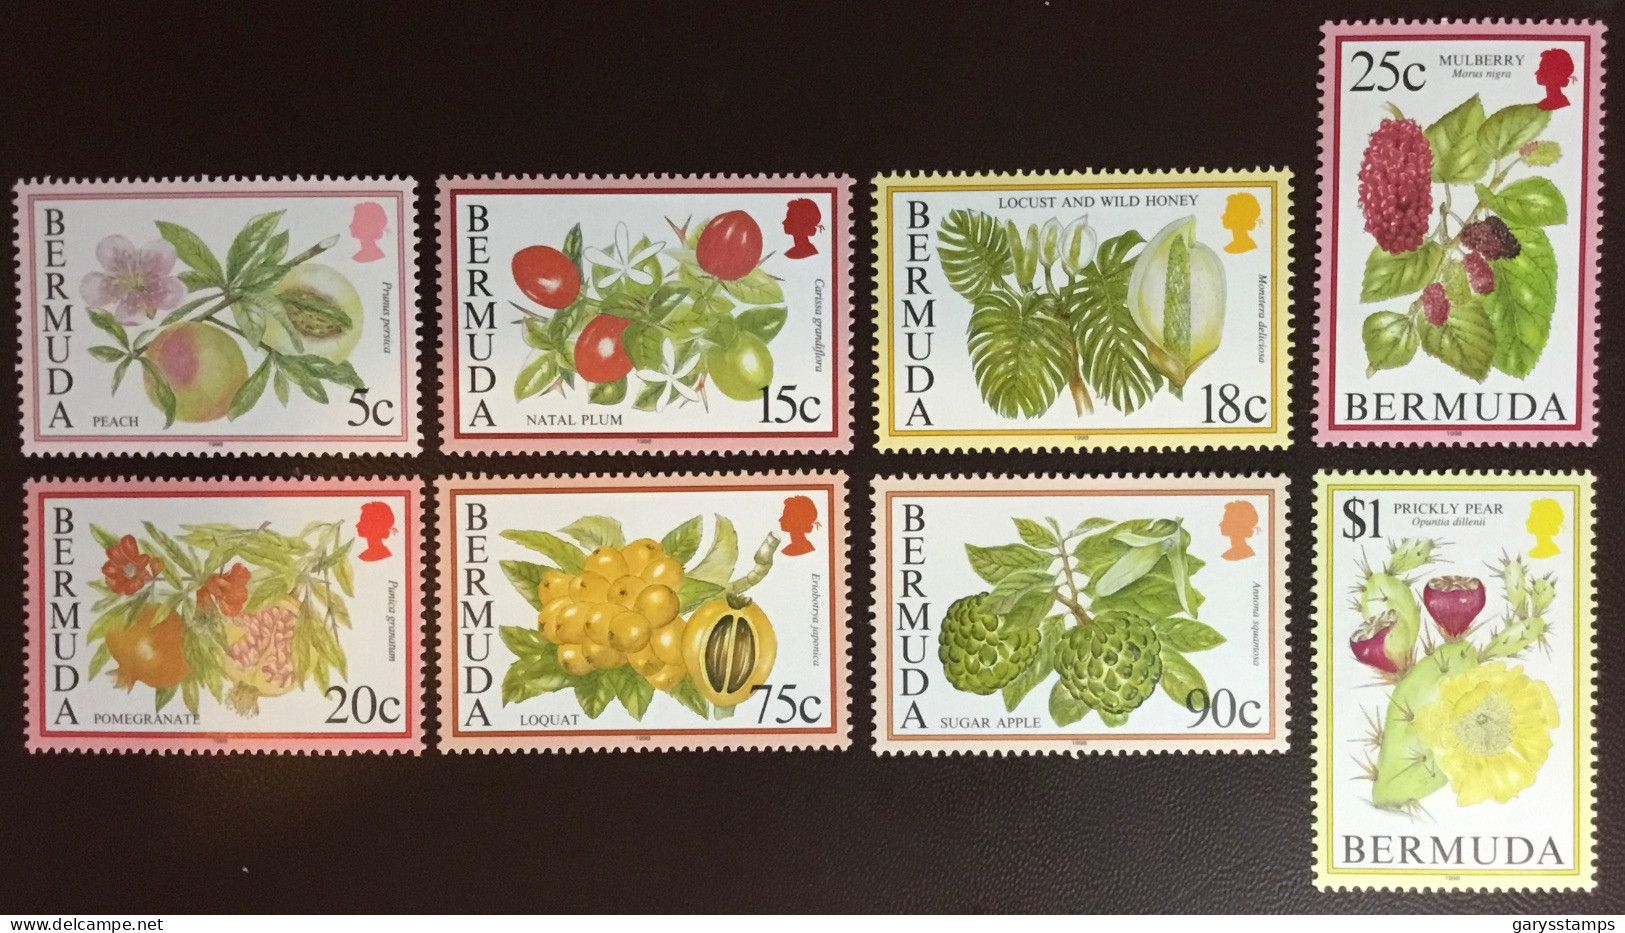 Bermuda 1998 Flowering Fruits Definitives Imprint Date Set MNH - Obst & Früchte